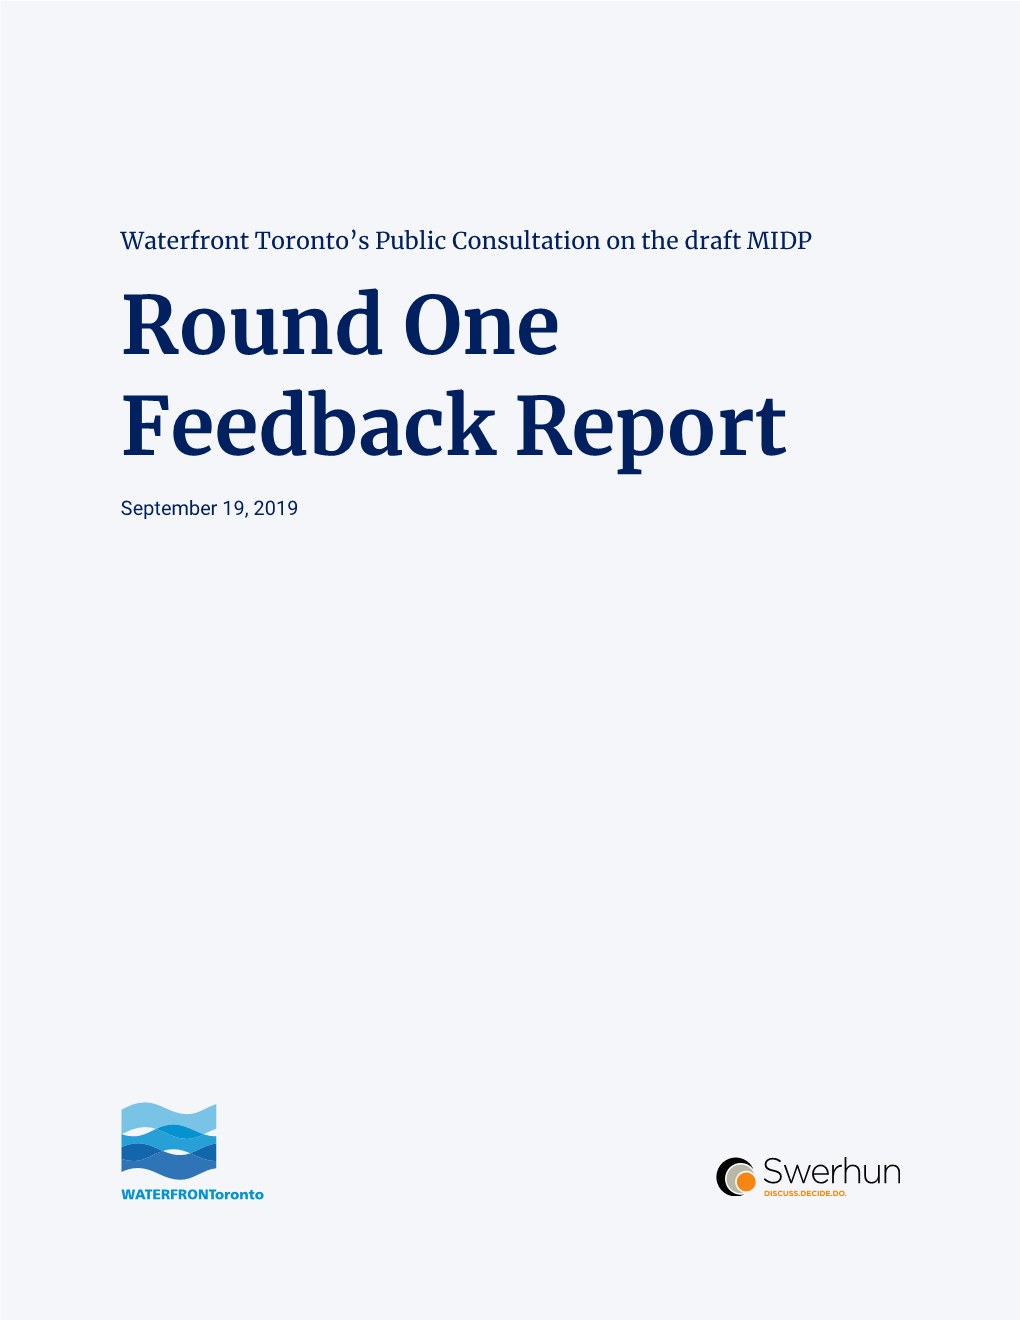 Round One Public Consultation Feedback Report on Sidewalk Labs